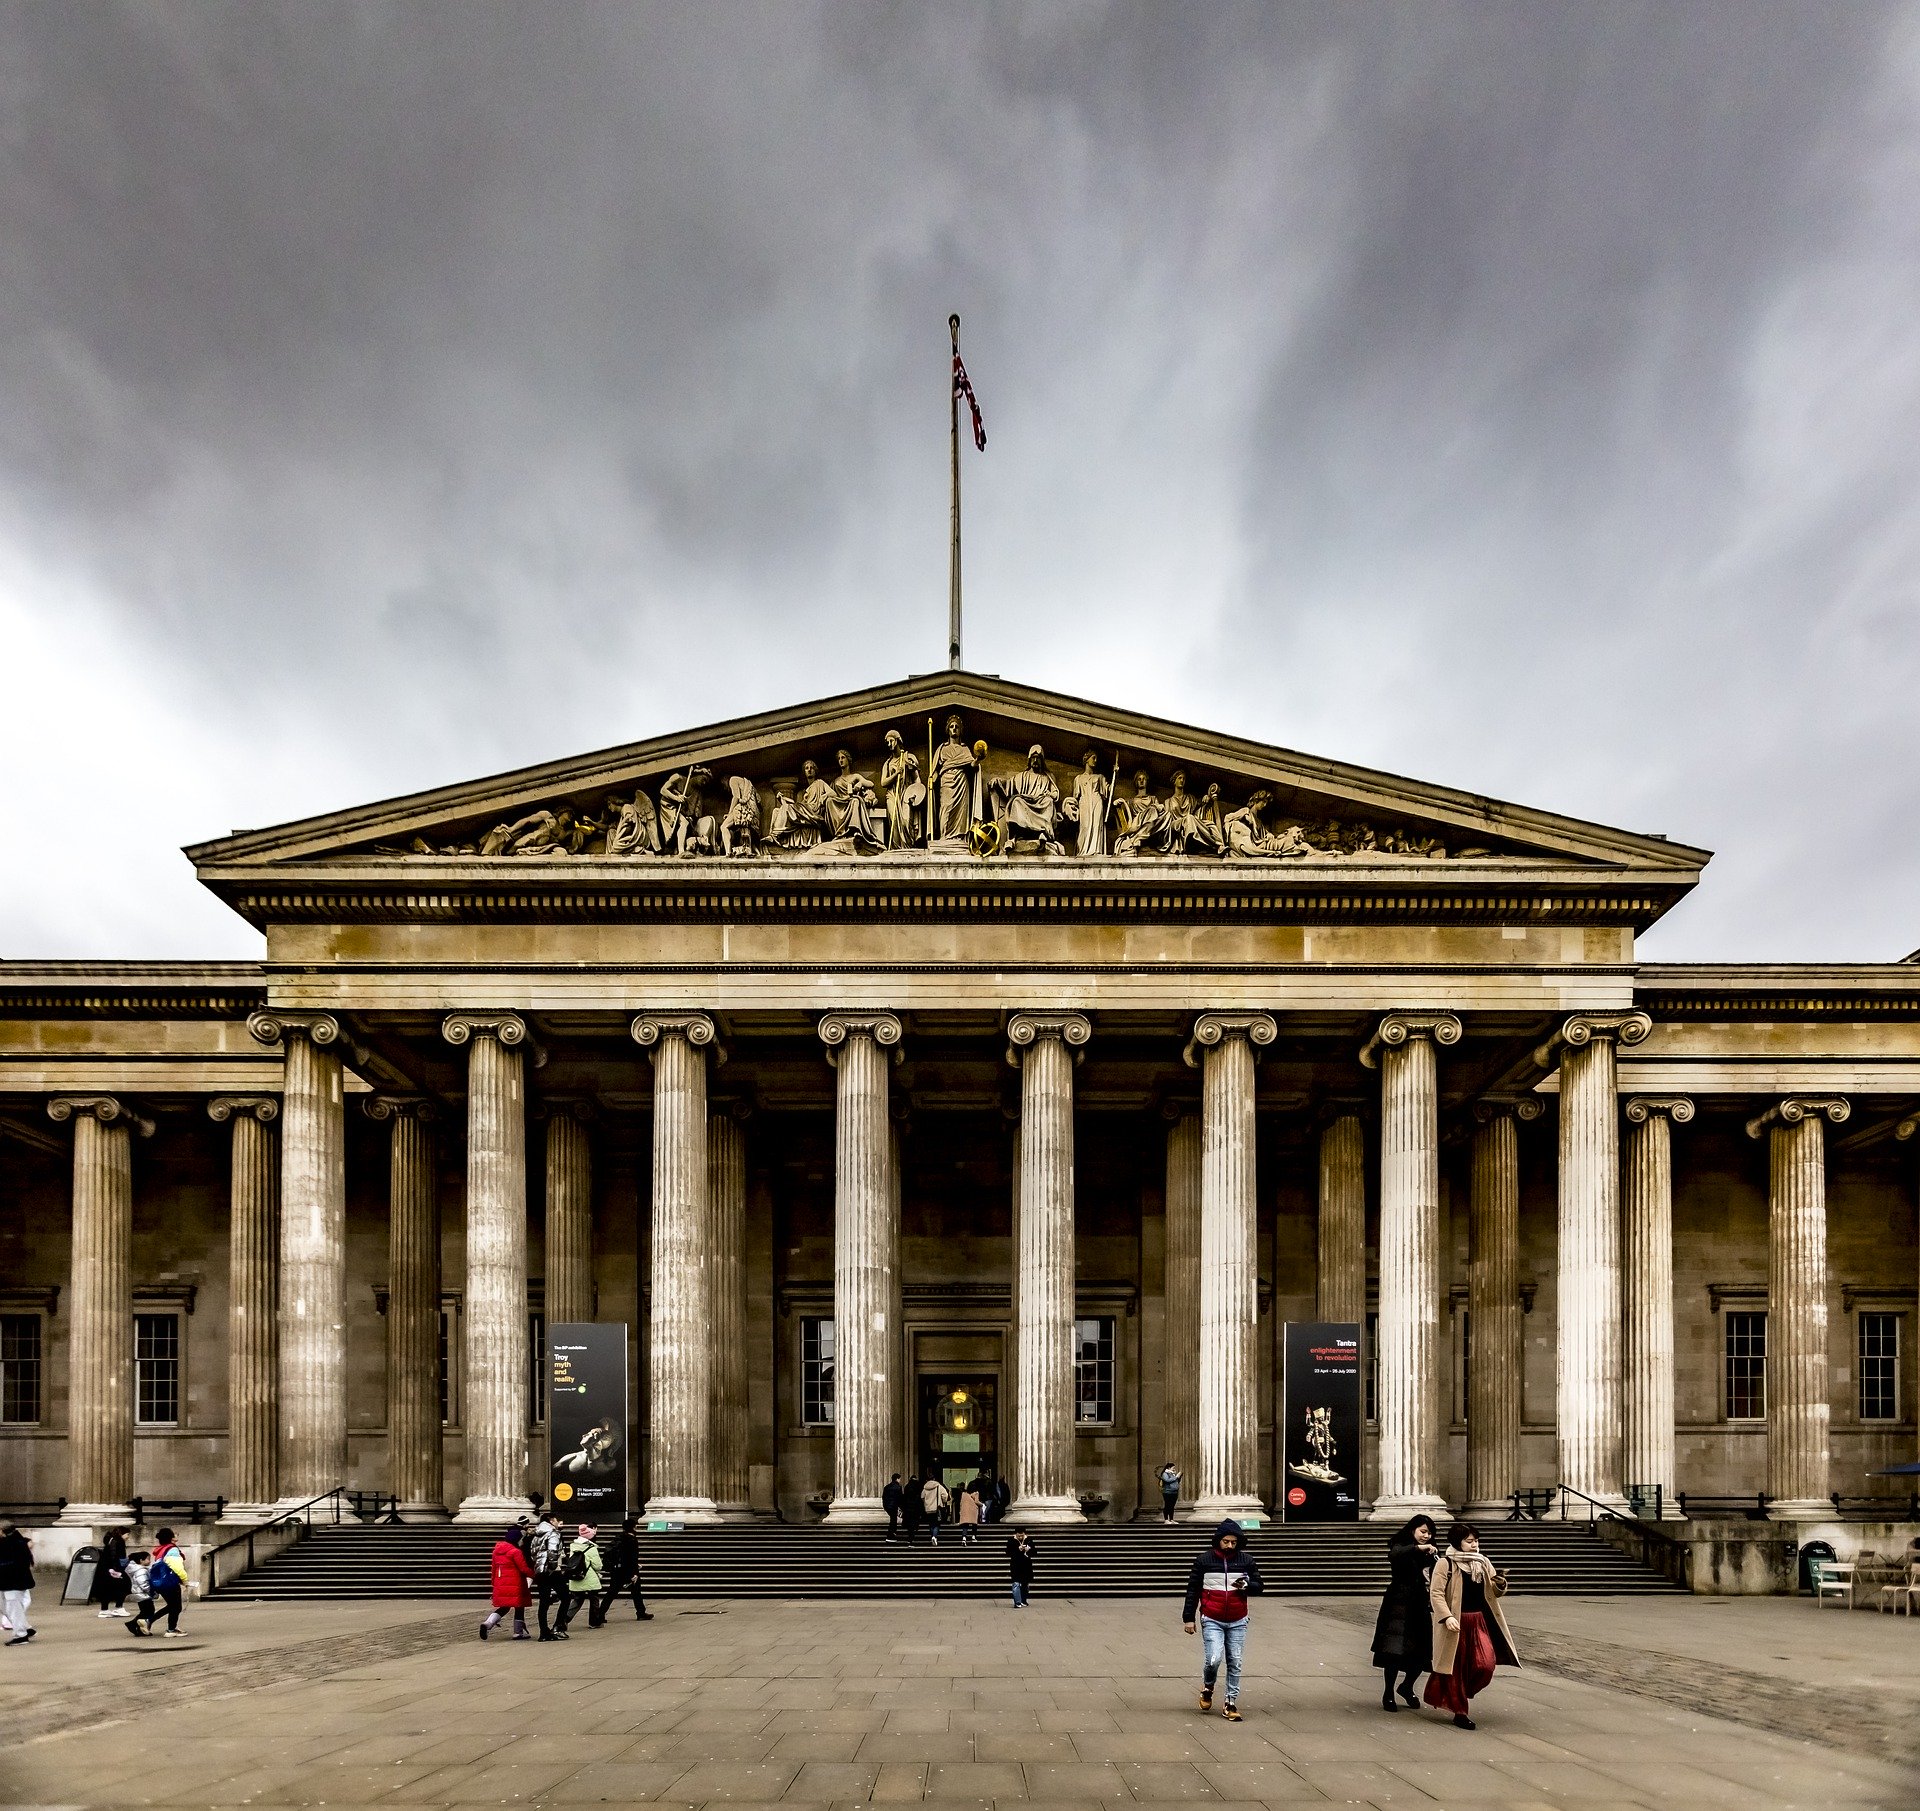 Should British museums return artefacts taken during colonisation?